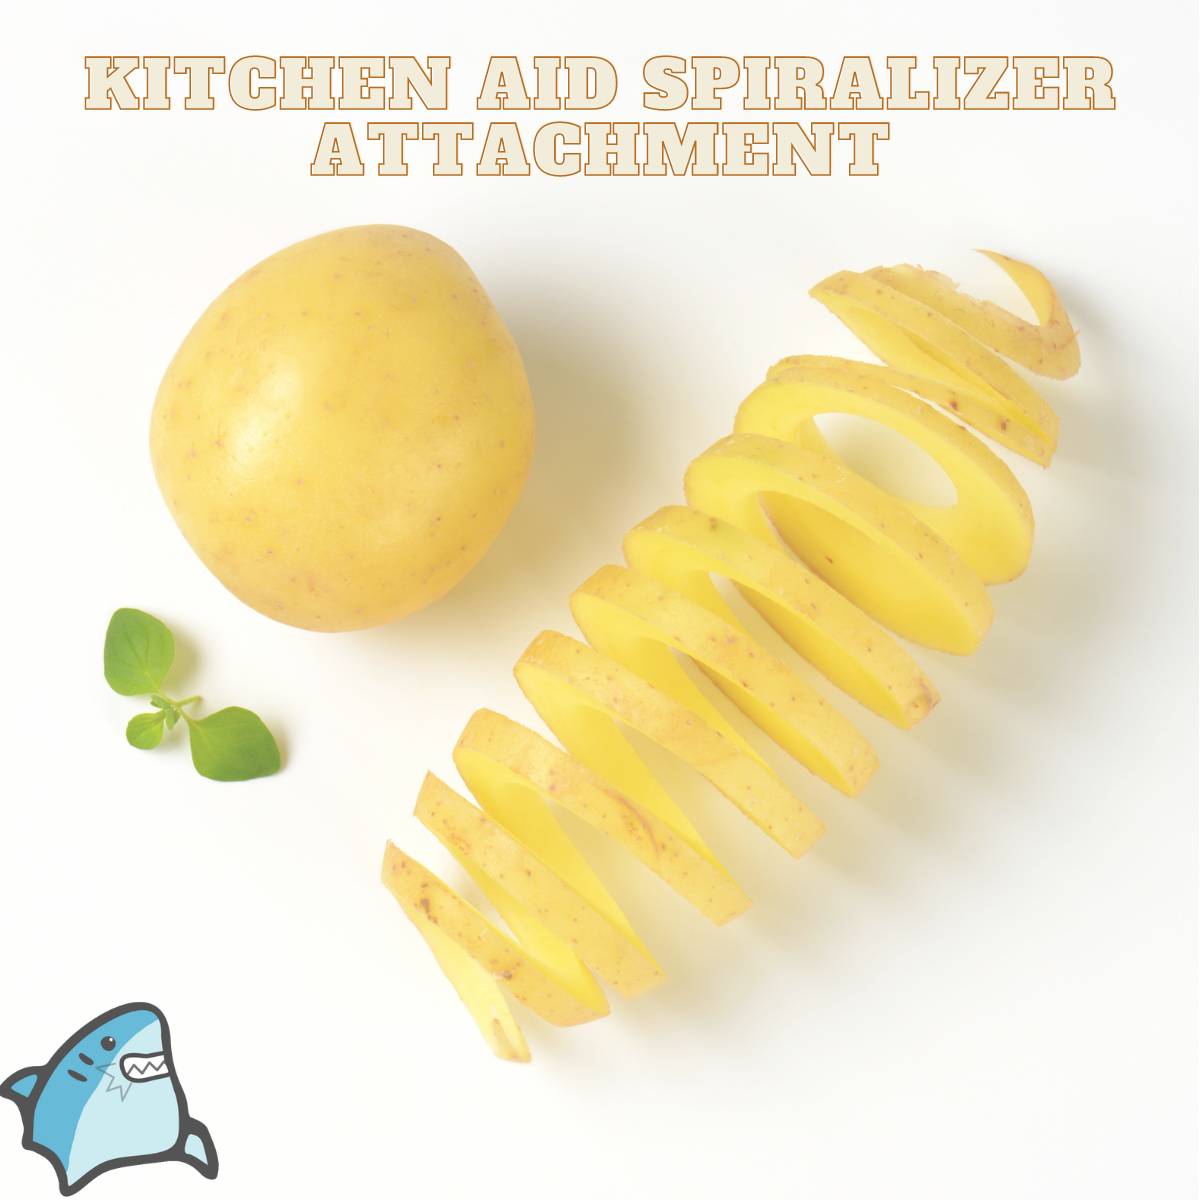  KitchenAid Fruit and Vegetable Spiralizer Attachment